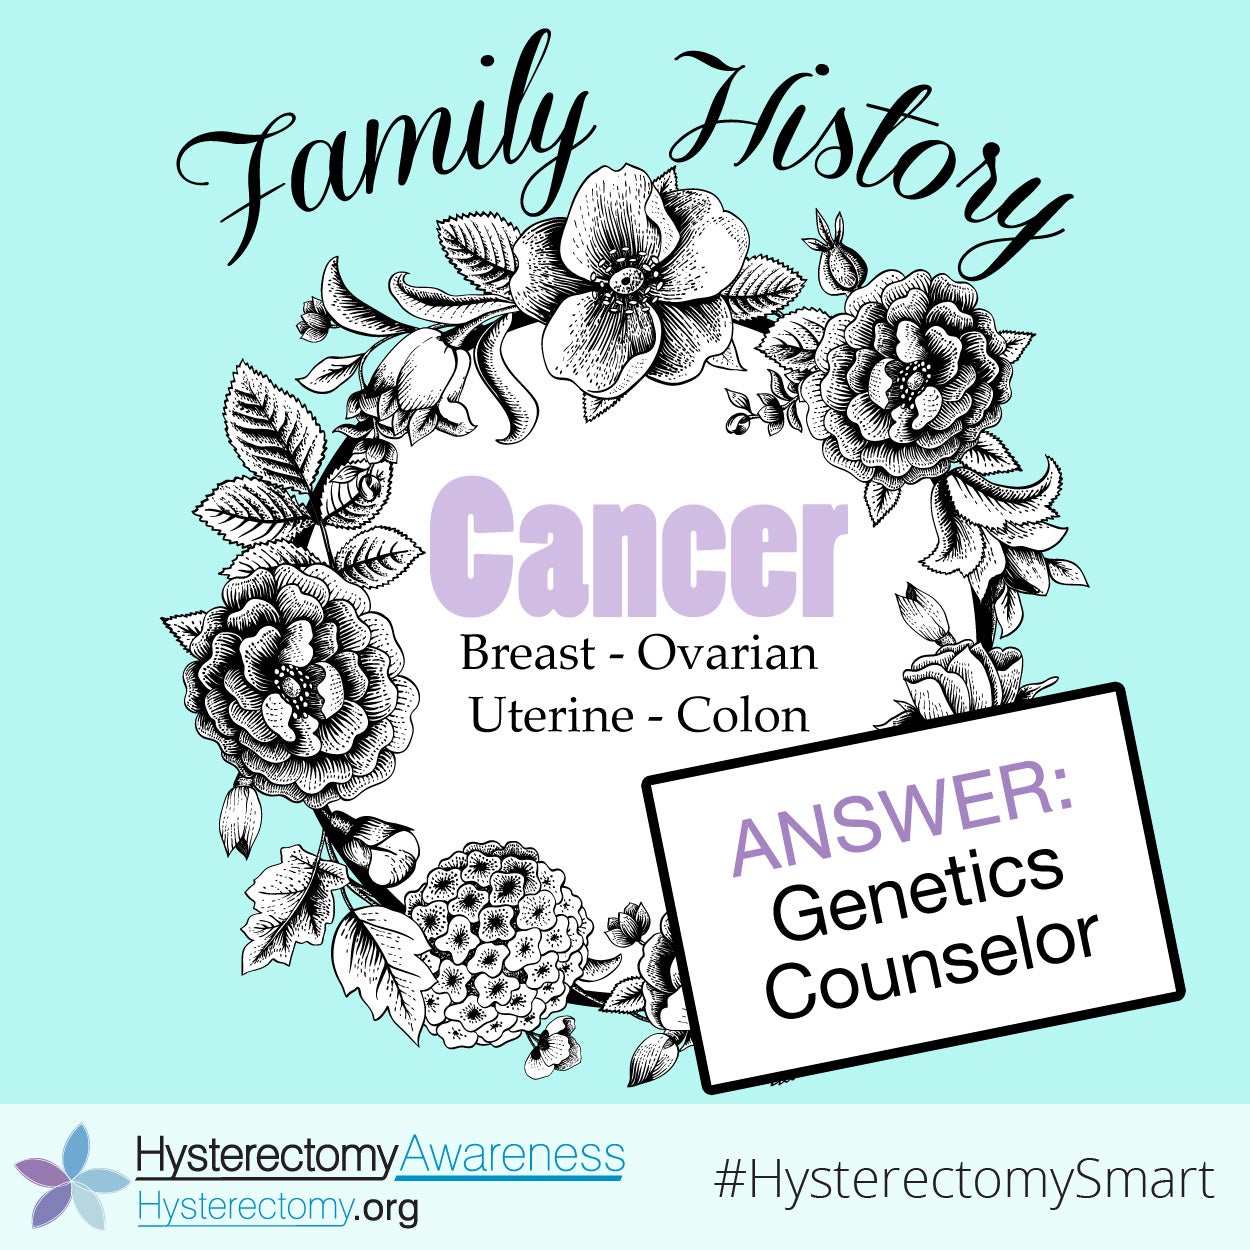 Family History Cancer – Breast Ovarian Uterine Colon #HysterectomySmart